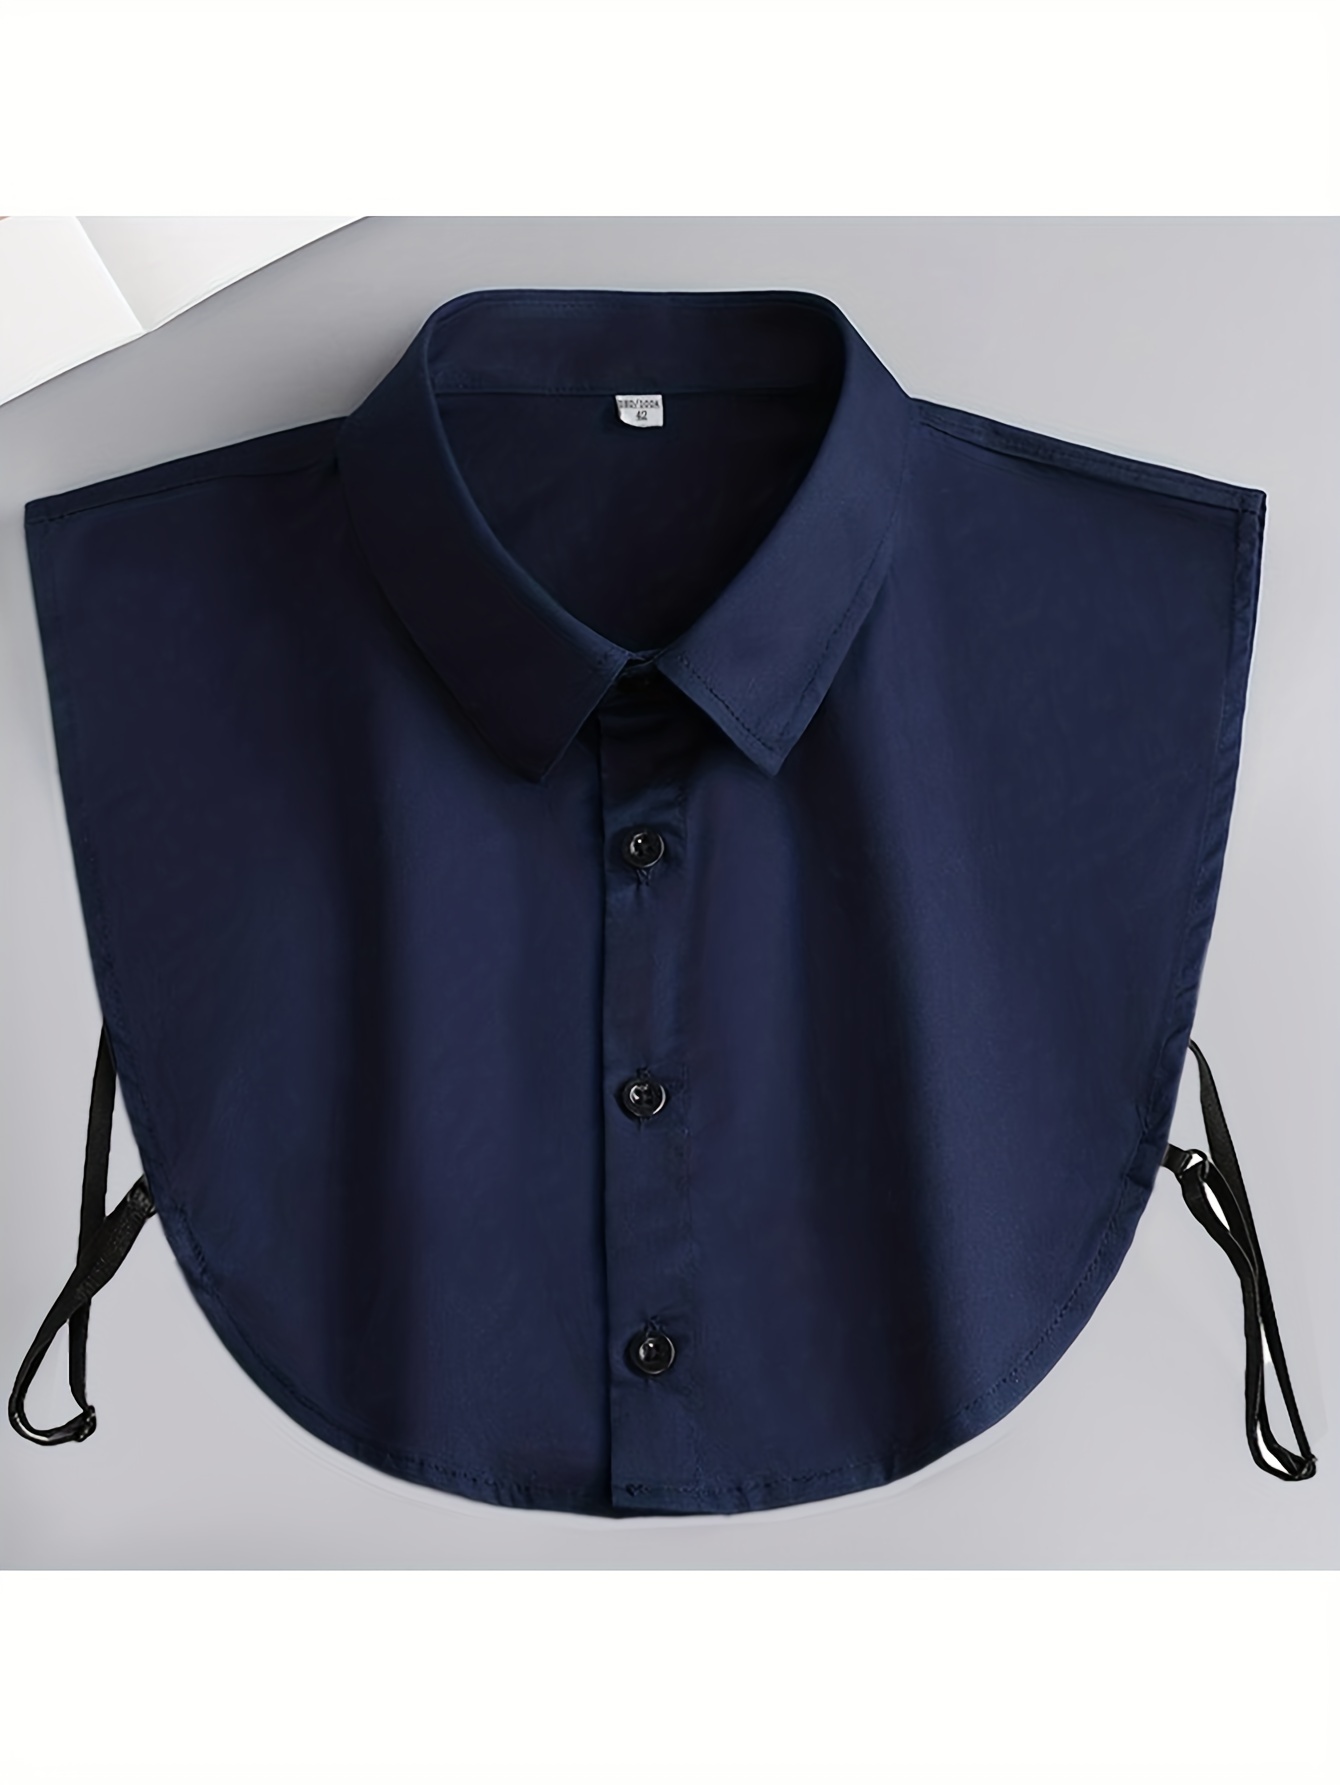 Elegant Fake Collar Shirt Men Offcial Formal False Collar Shirt Lapel